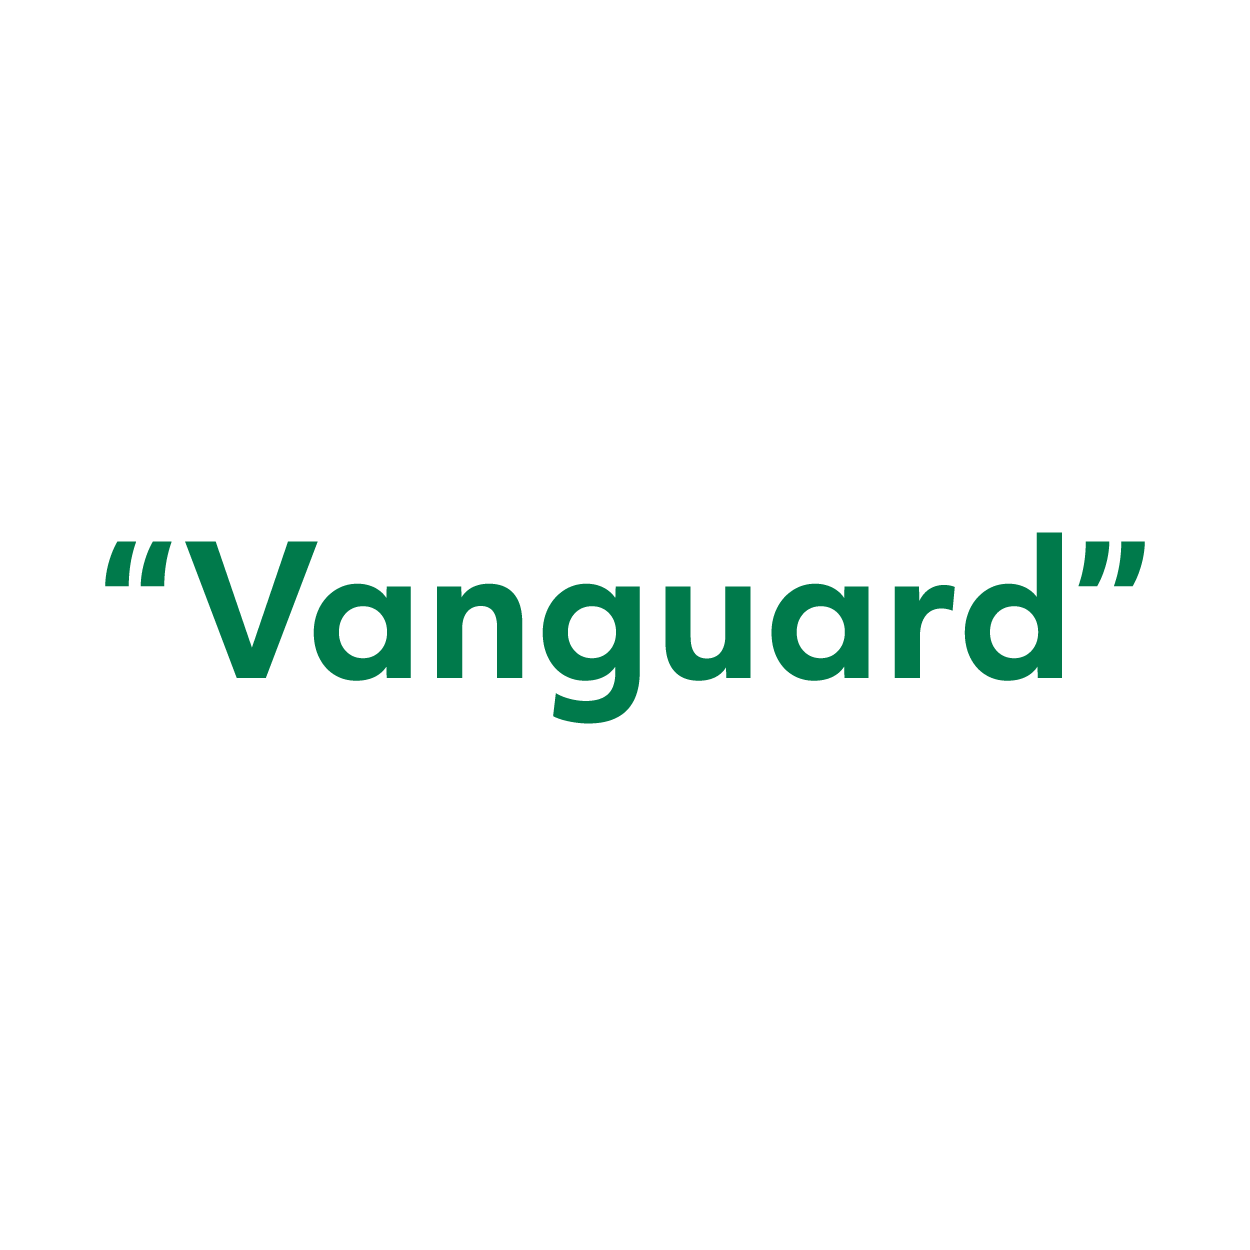 Vanguard placeholder logo